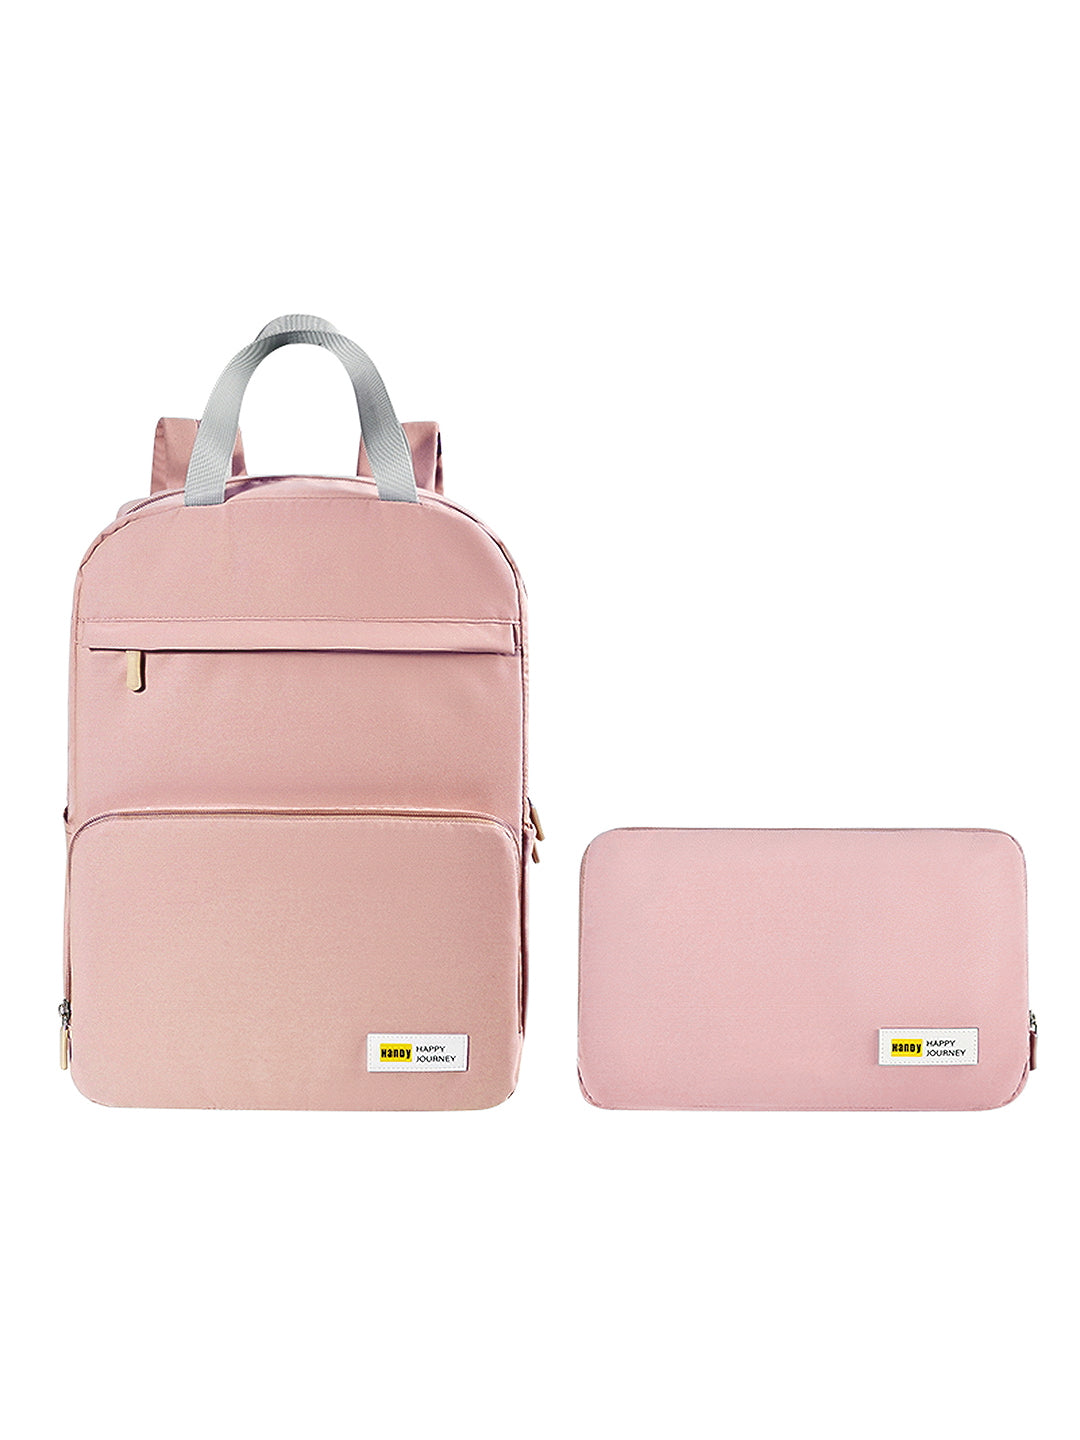 foldable-travelling-bag-pink